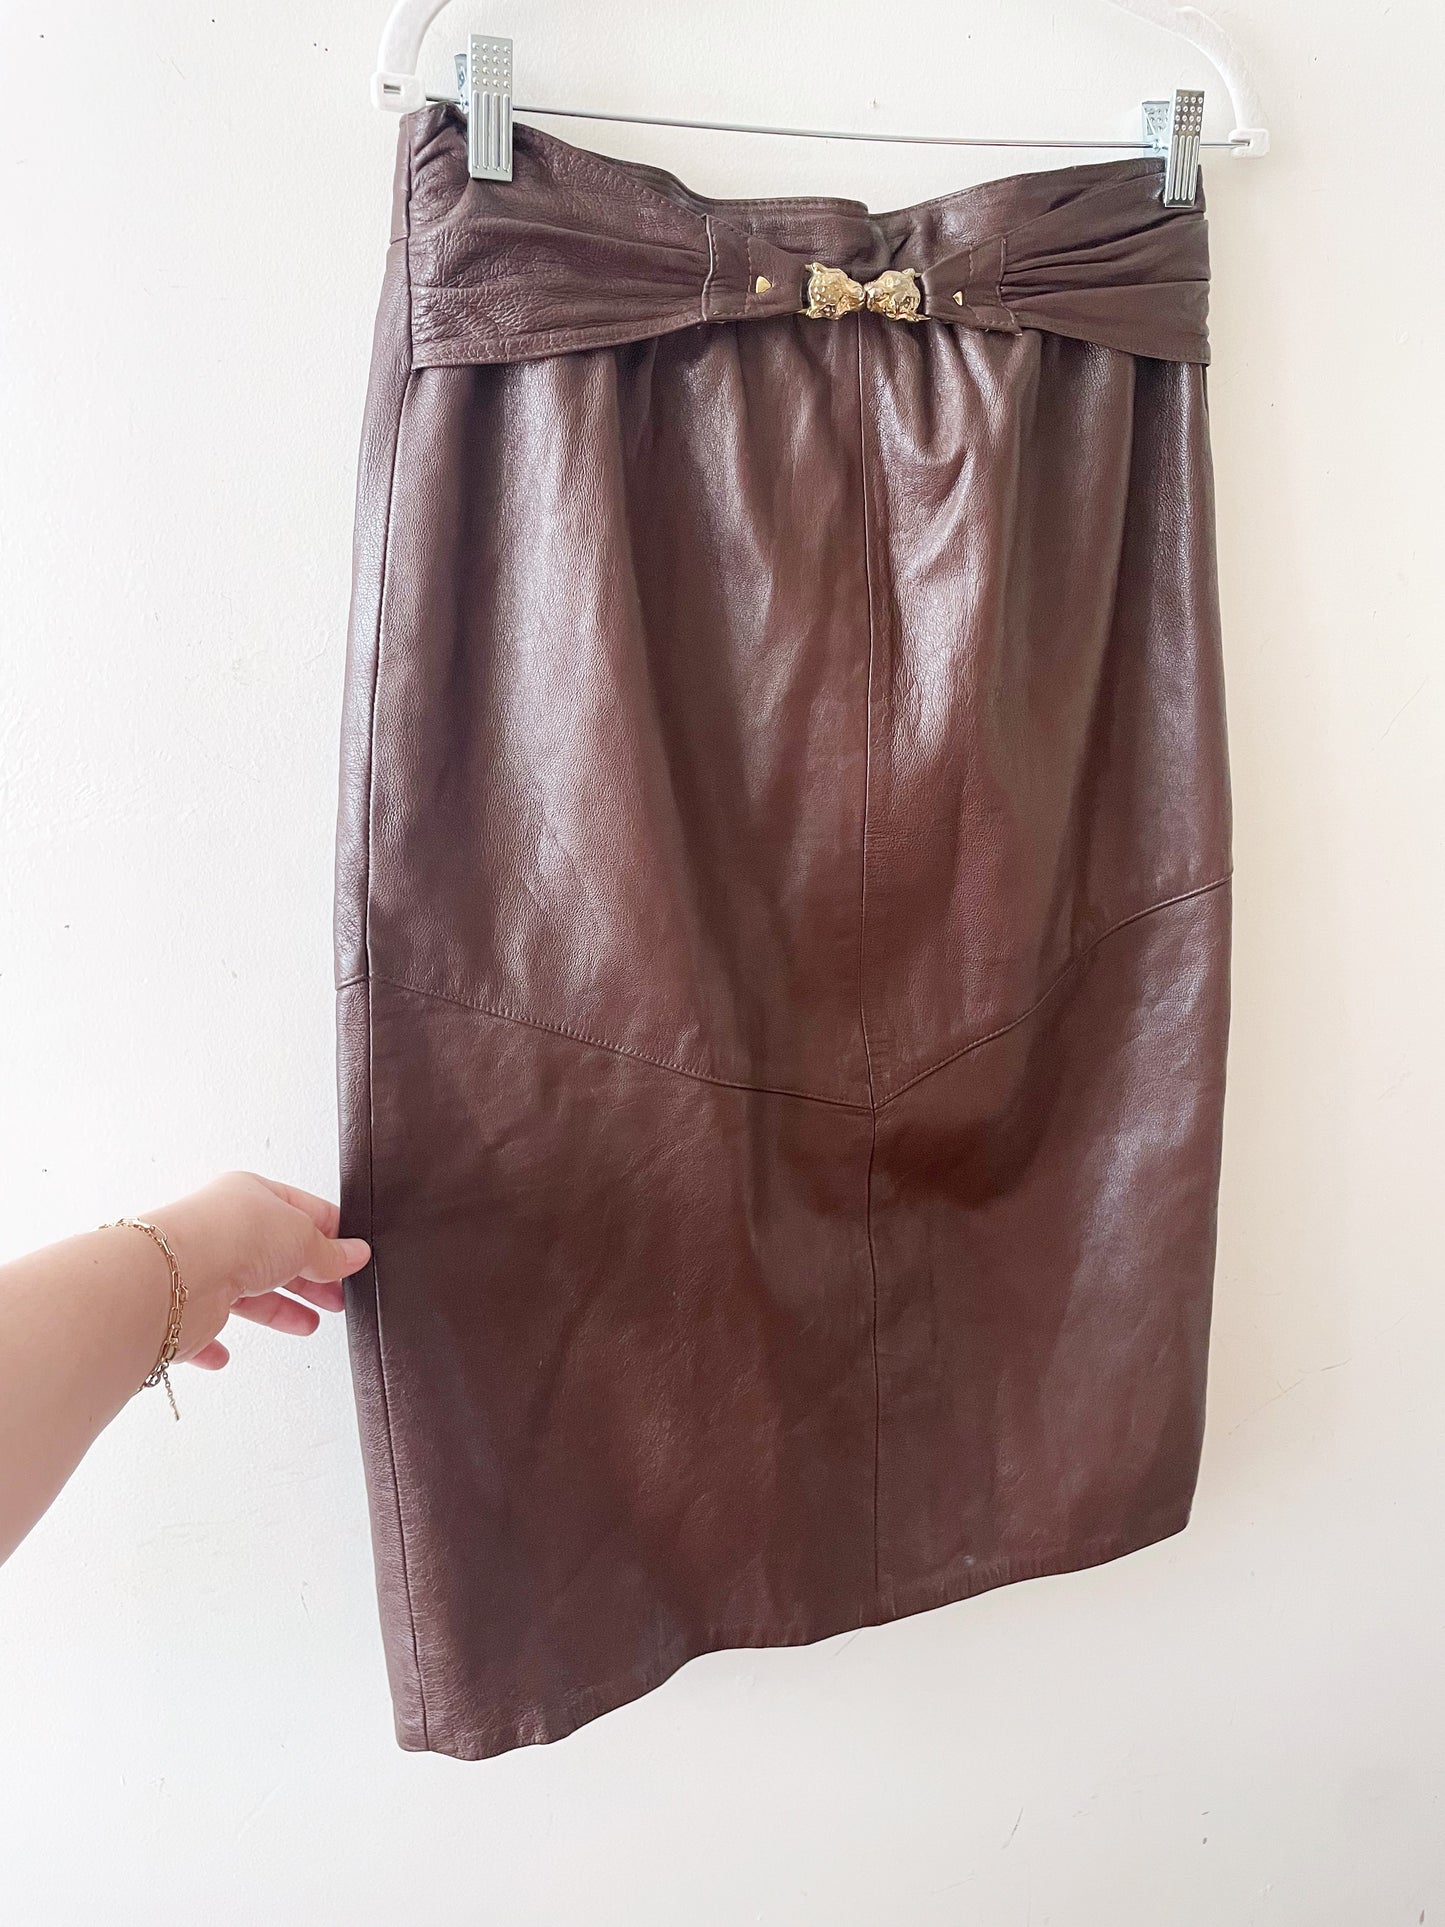 Chocolate Leather Cheetah Skirt